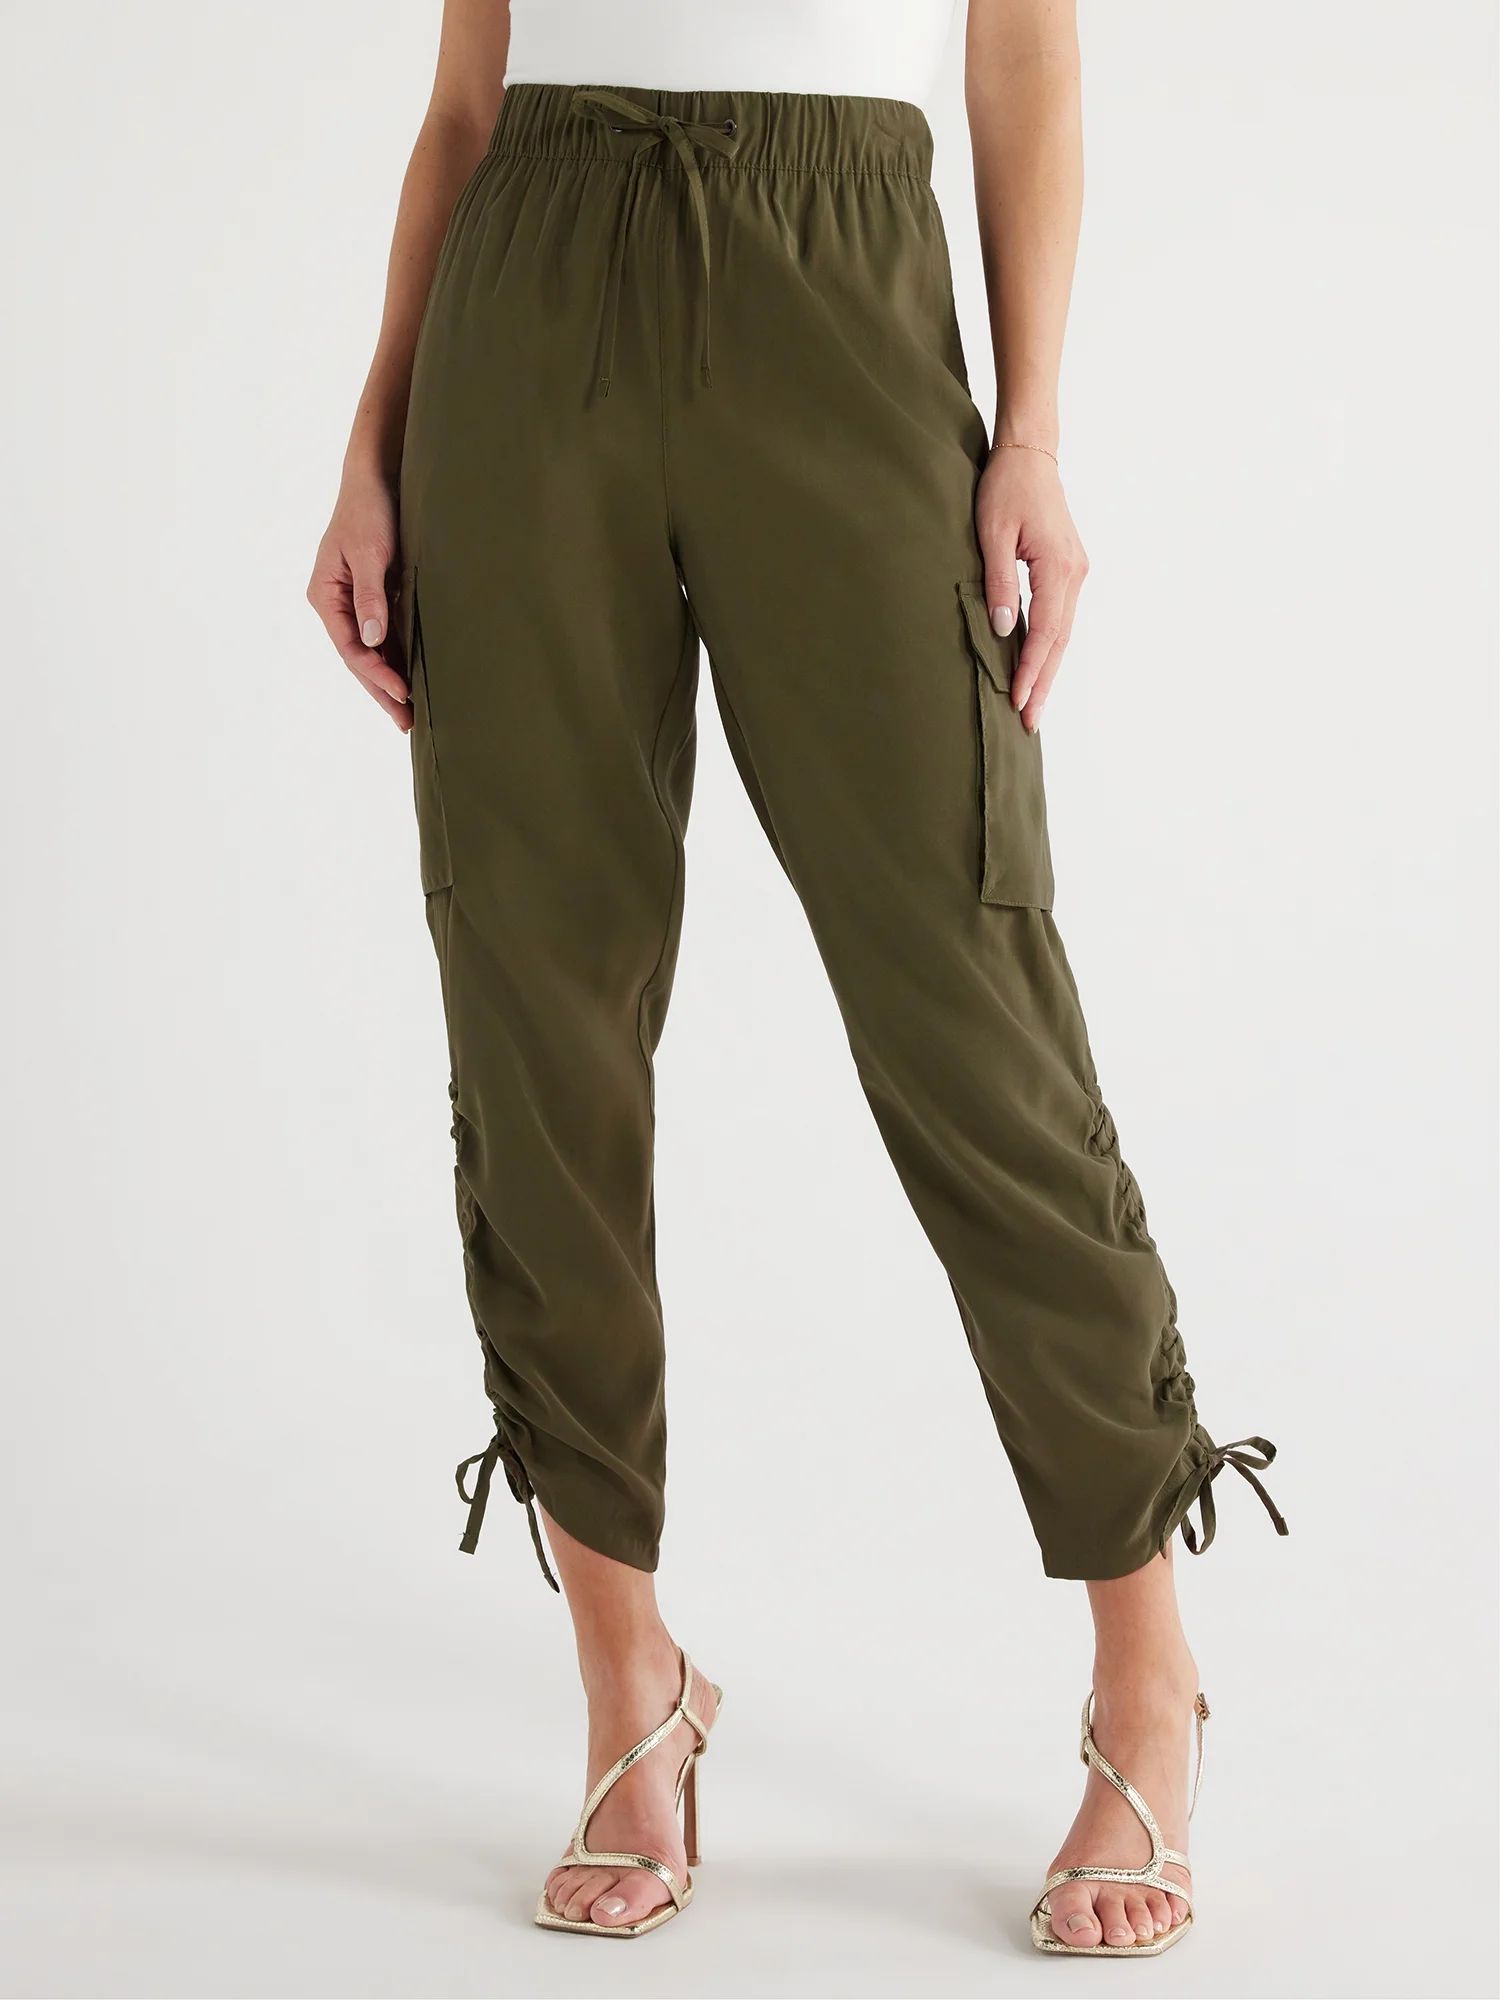 Sofia Jeans Women's Super High Rise Luxe Cargo Pants, 27" Inseam, Sizes XXS-XXXL | Walmart (US)